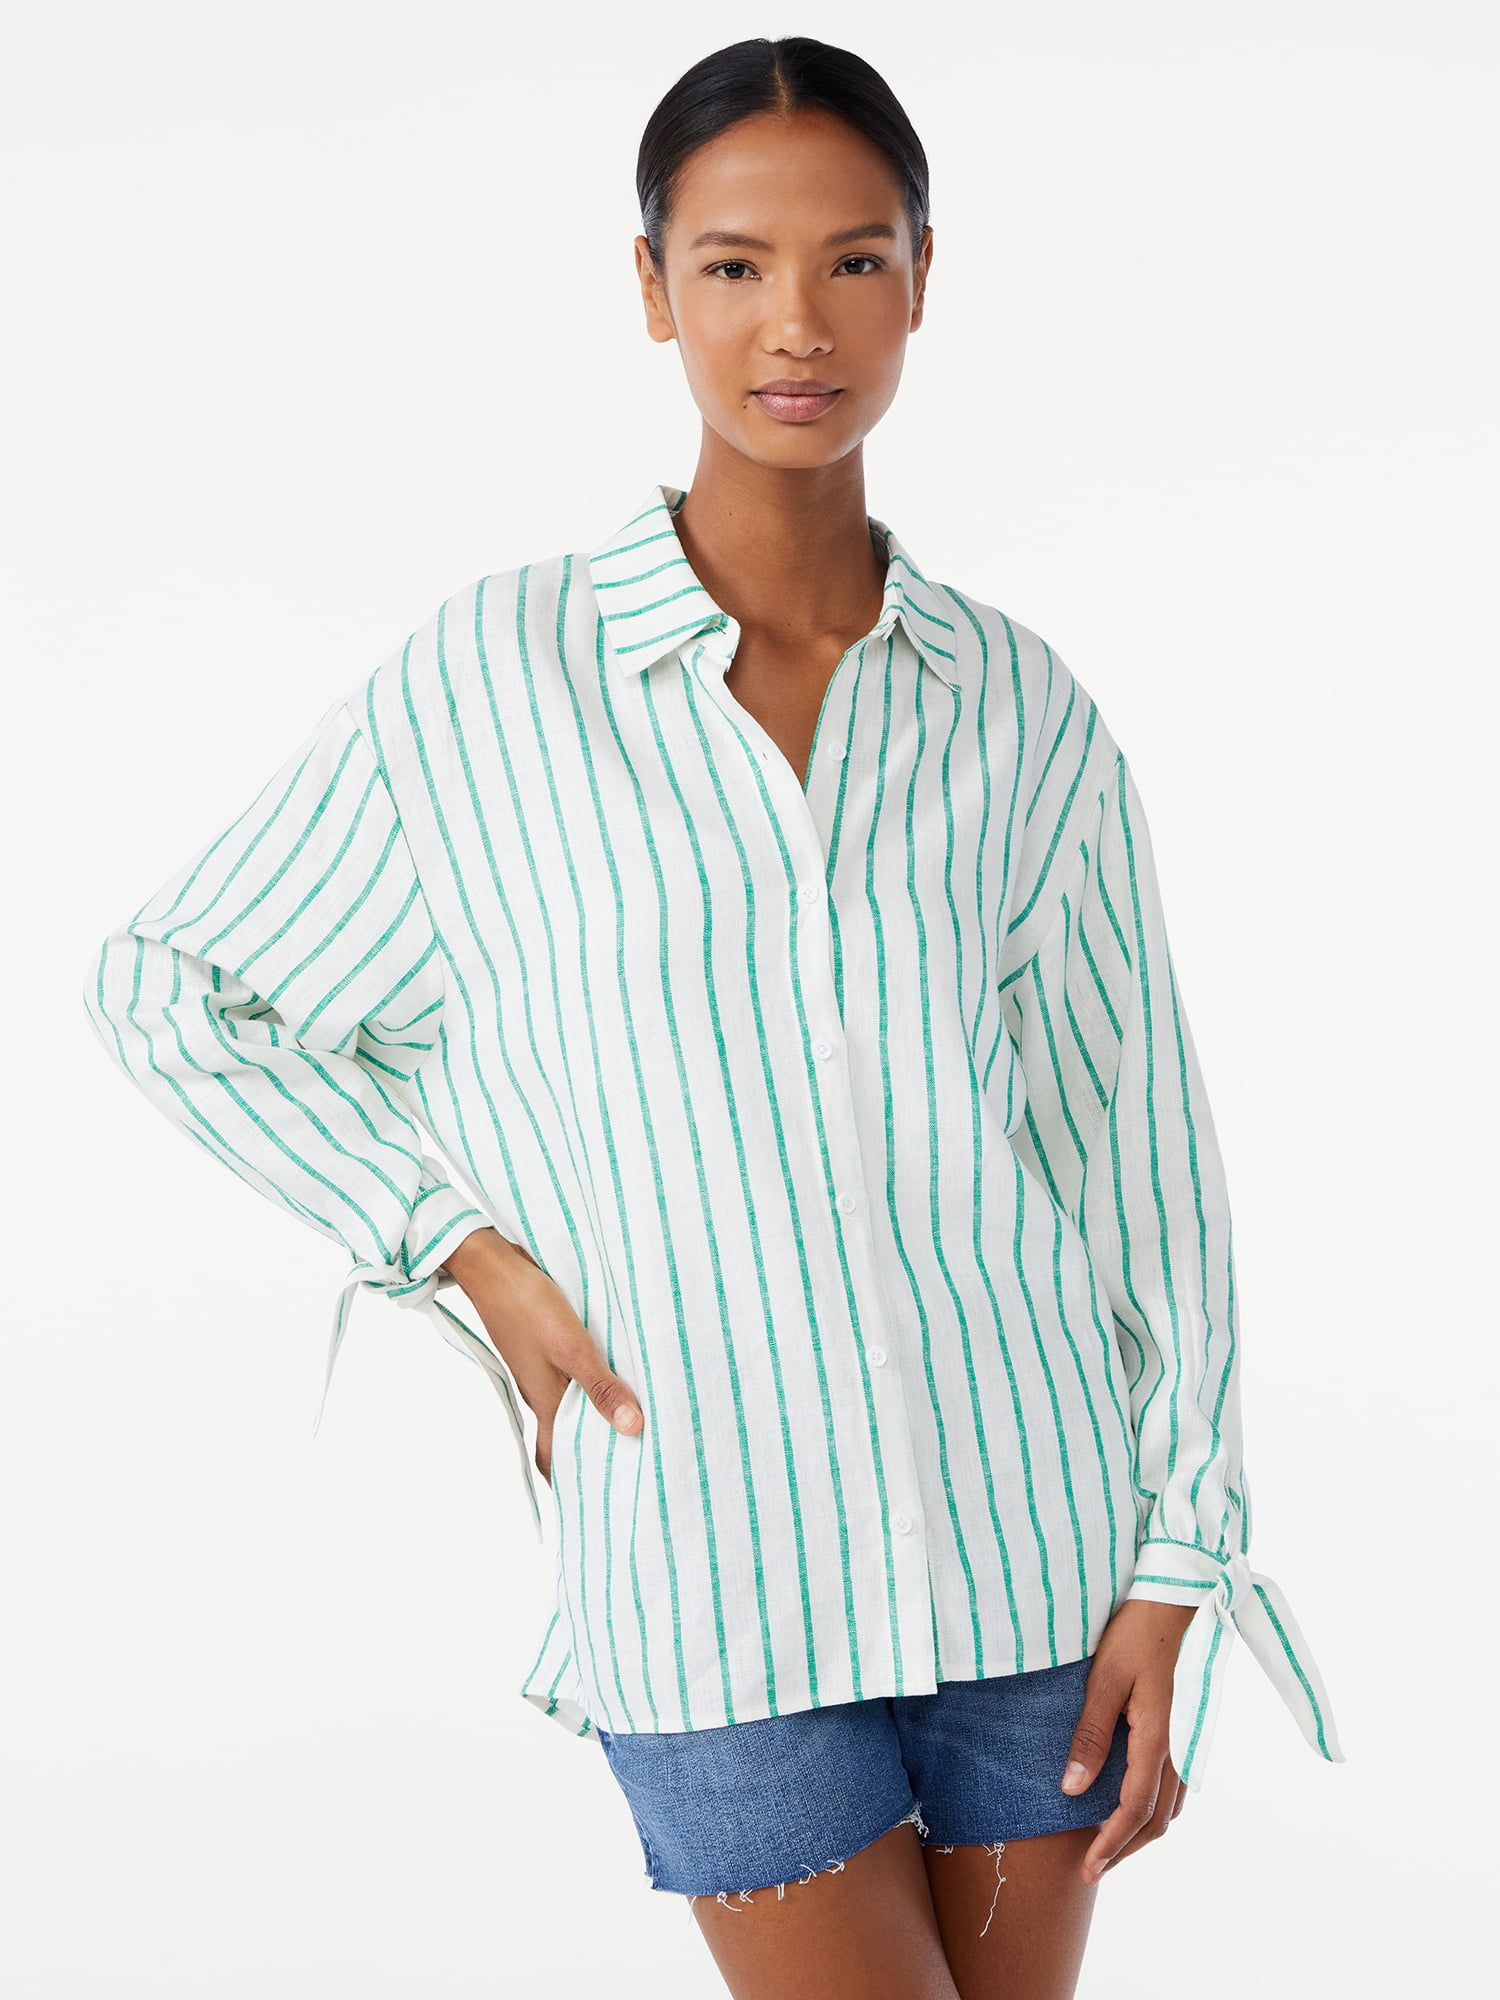 Scoop Women's Blouse with Long Sleeves - Walmart.com